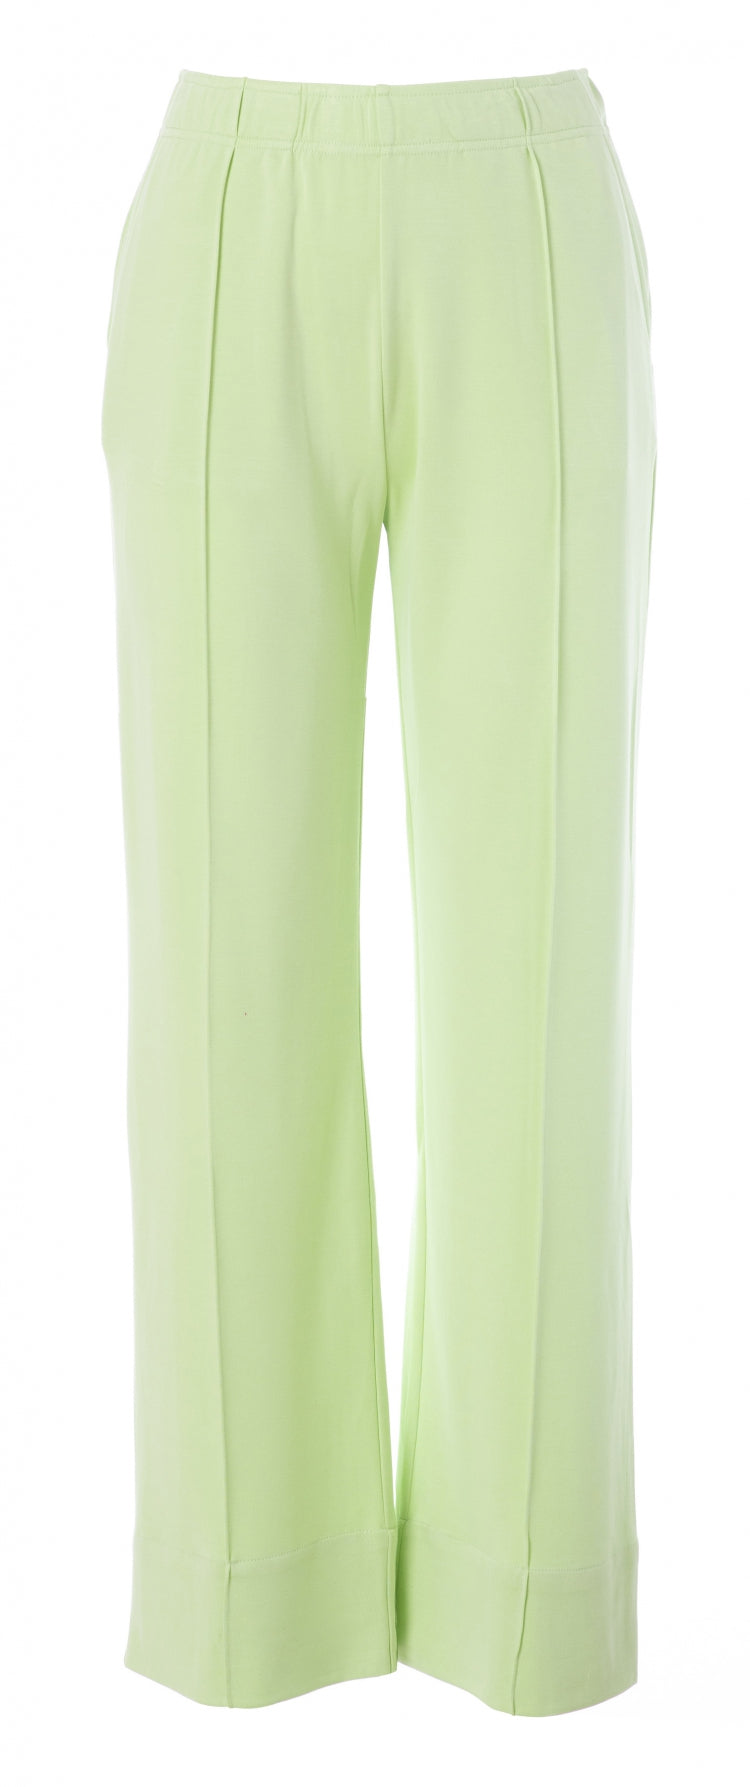 Coast trousers C3075 654 Lime